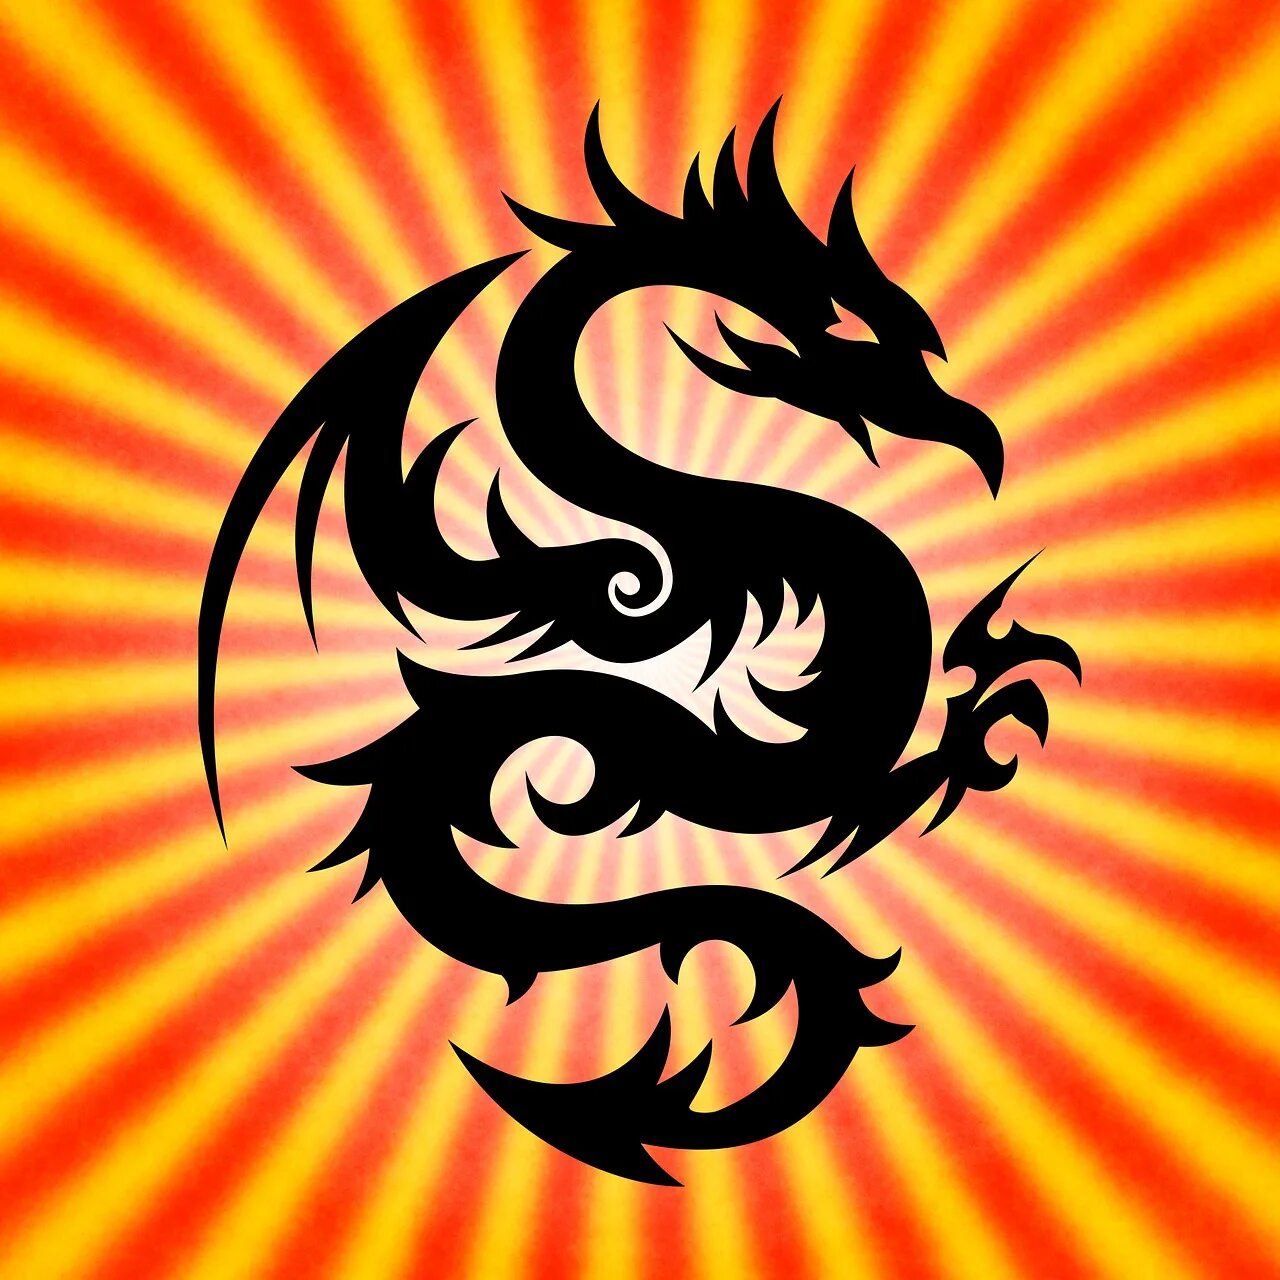 Дракон символ чего. Символ дракона. Символы драконов. Огненный дракон символ. Красивый символ дракона.